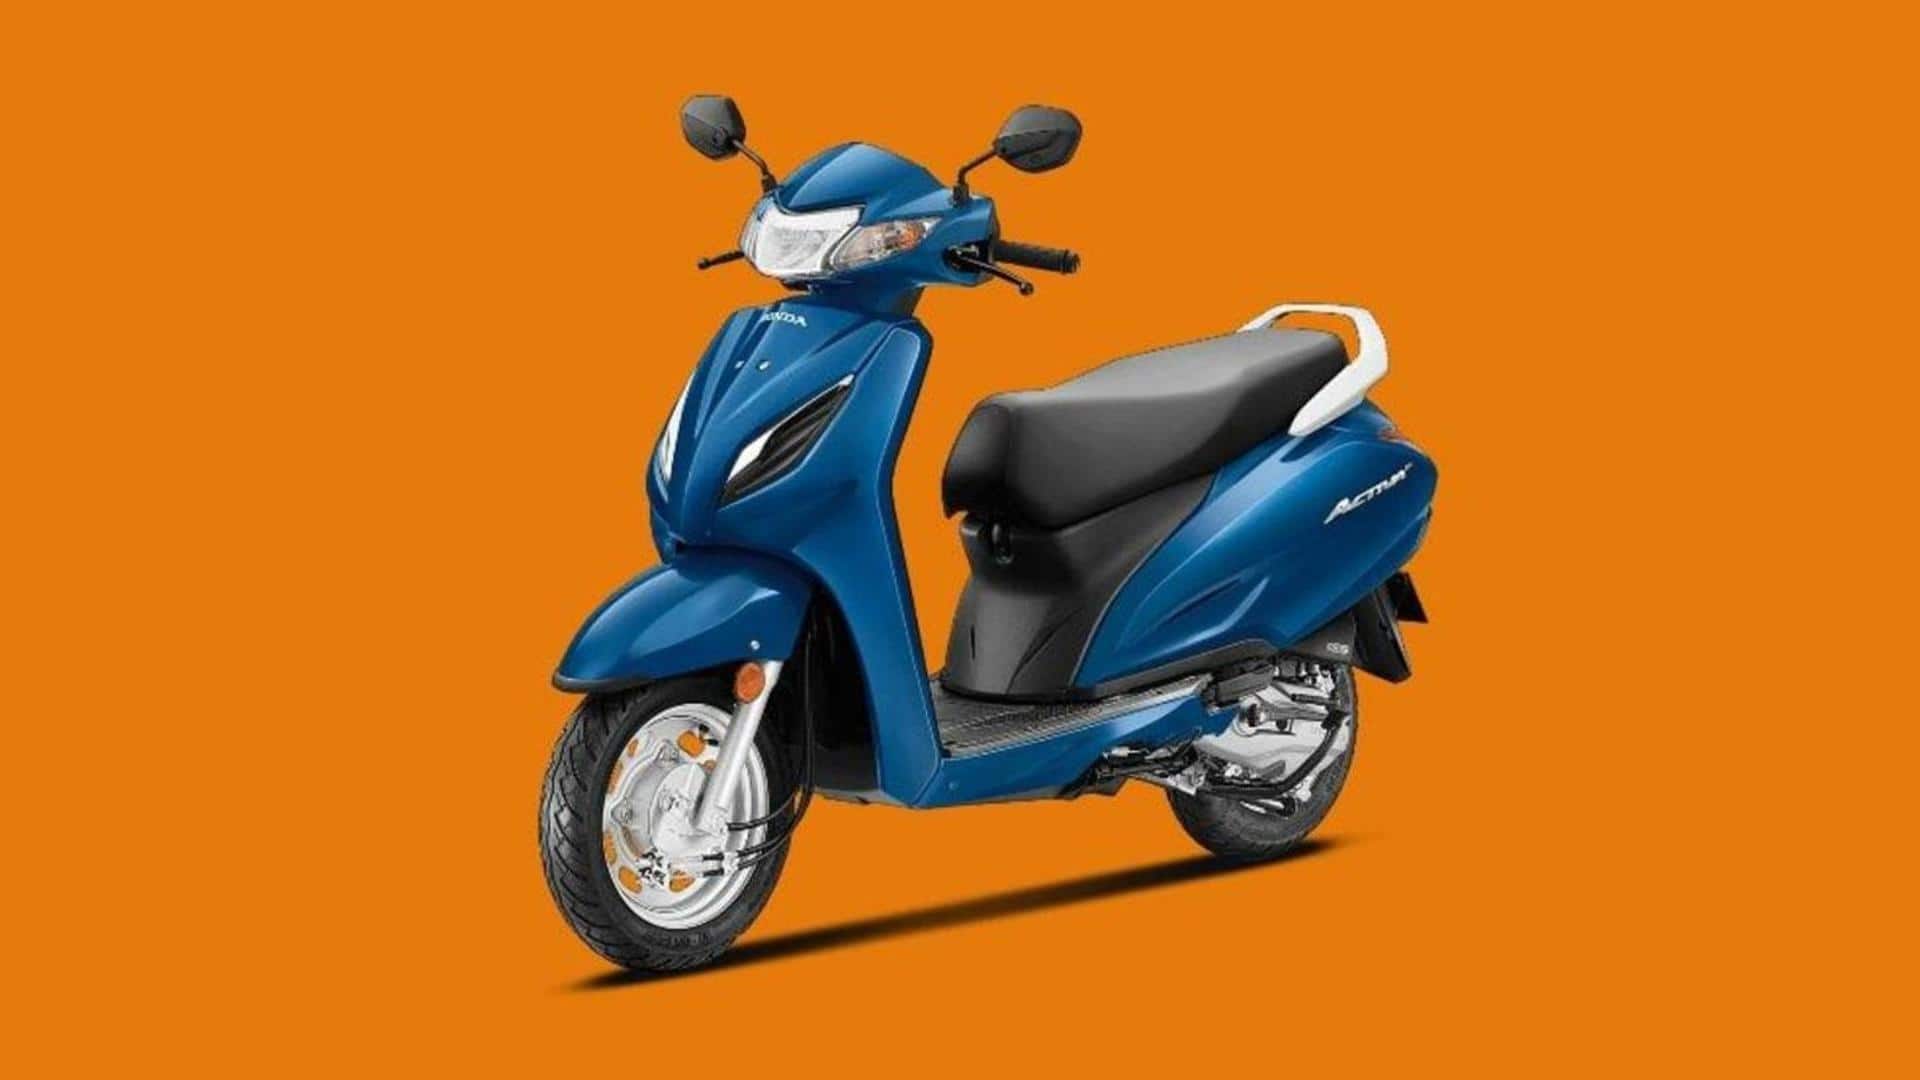 Honda Activa Premium Edition automatic scooter revealed ahead of